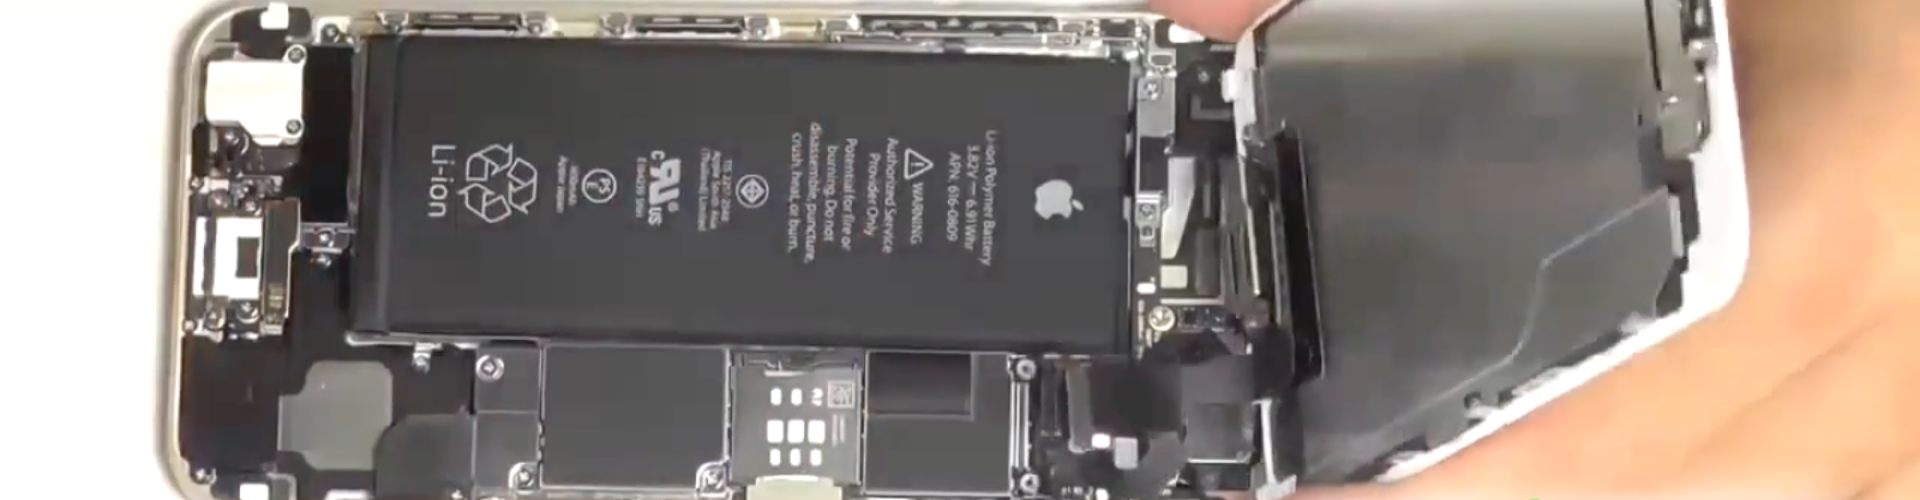 ремонт iPhone прага